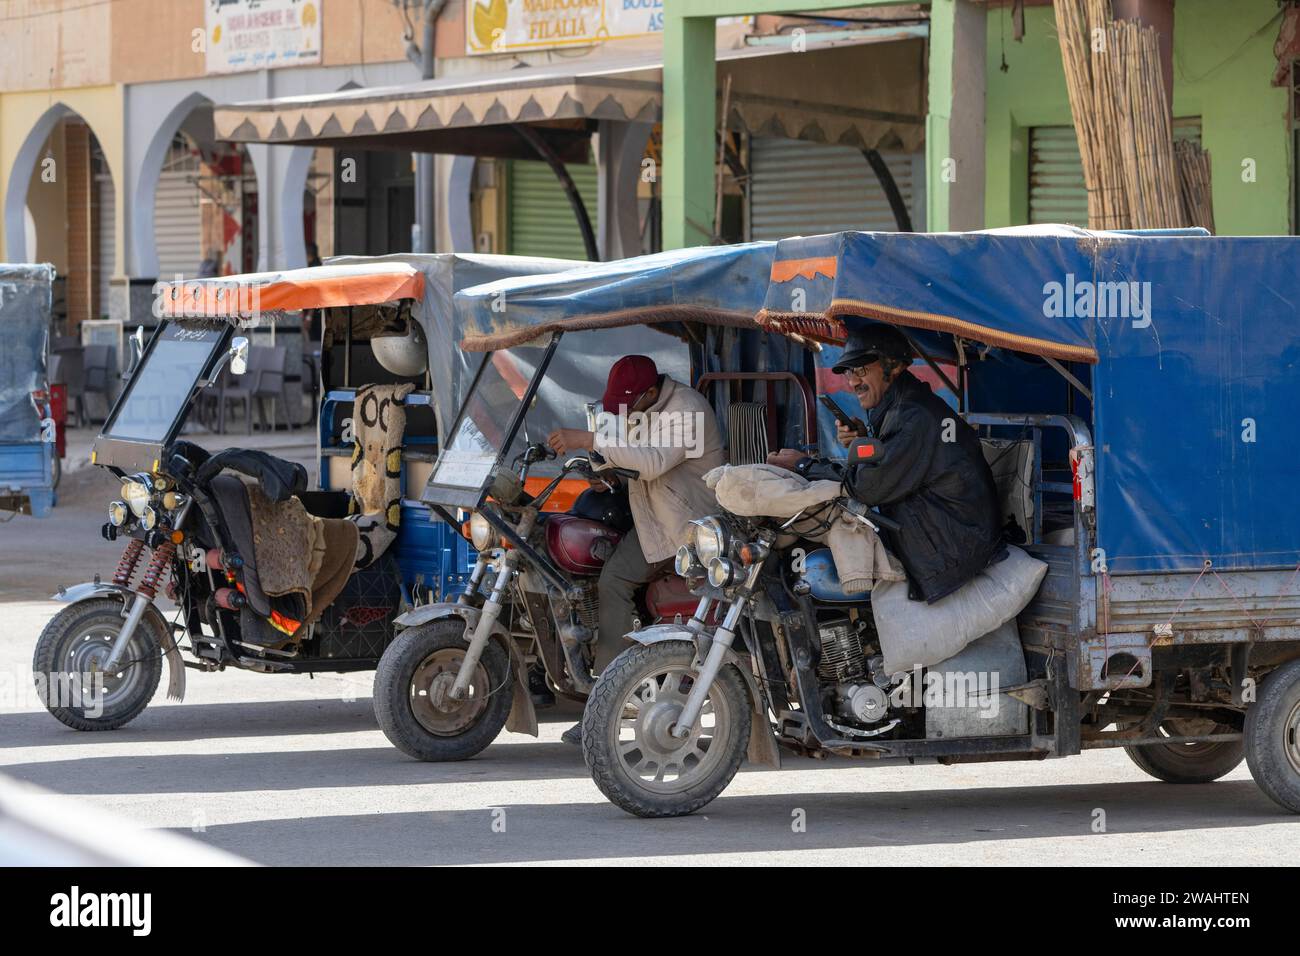 Scène de rue, tuk tuks marocains avec chauffeur, Merzouga, Maroc Banque D'Images